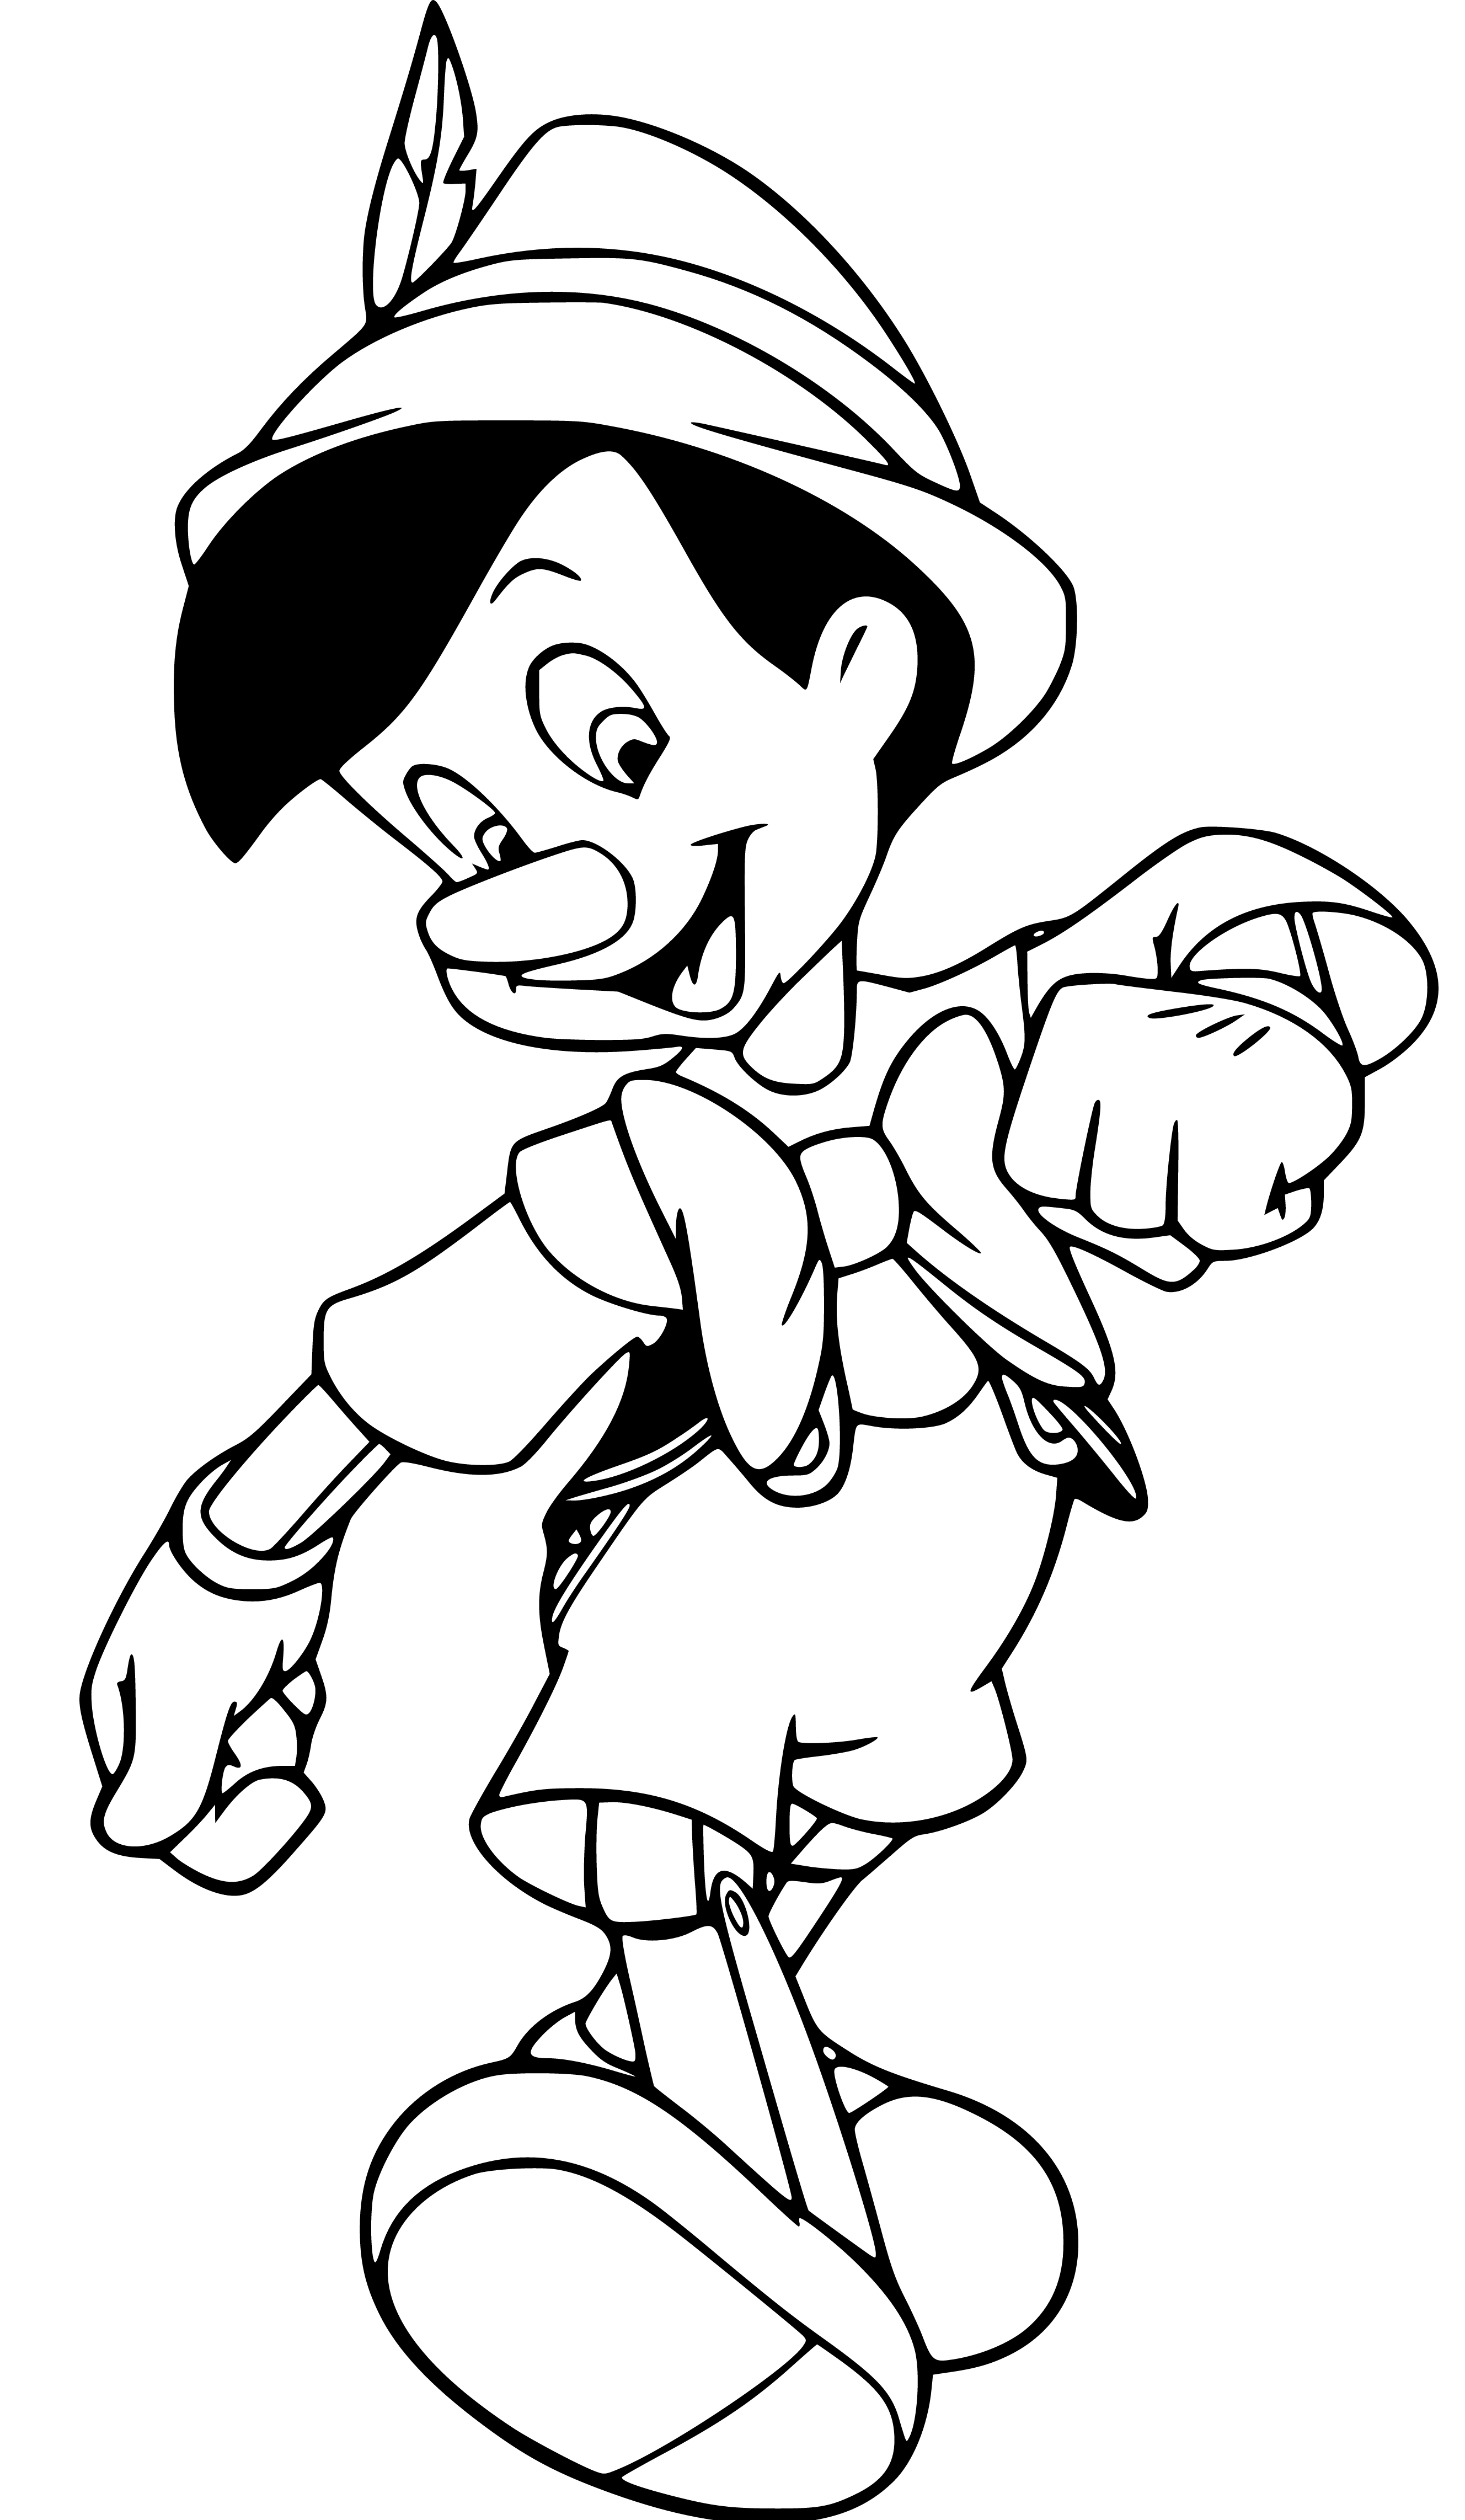 Pinocchio Happy Coloring Page for Kids - SheetalColor.com